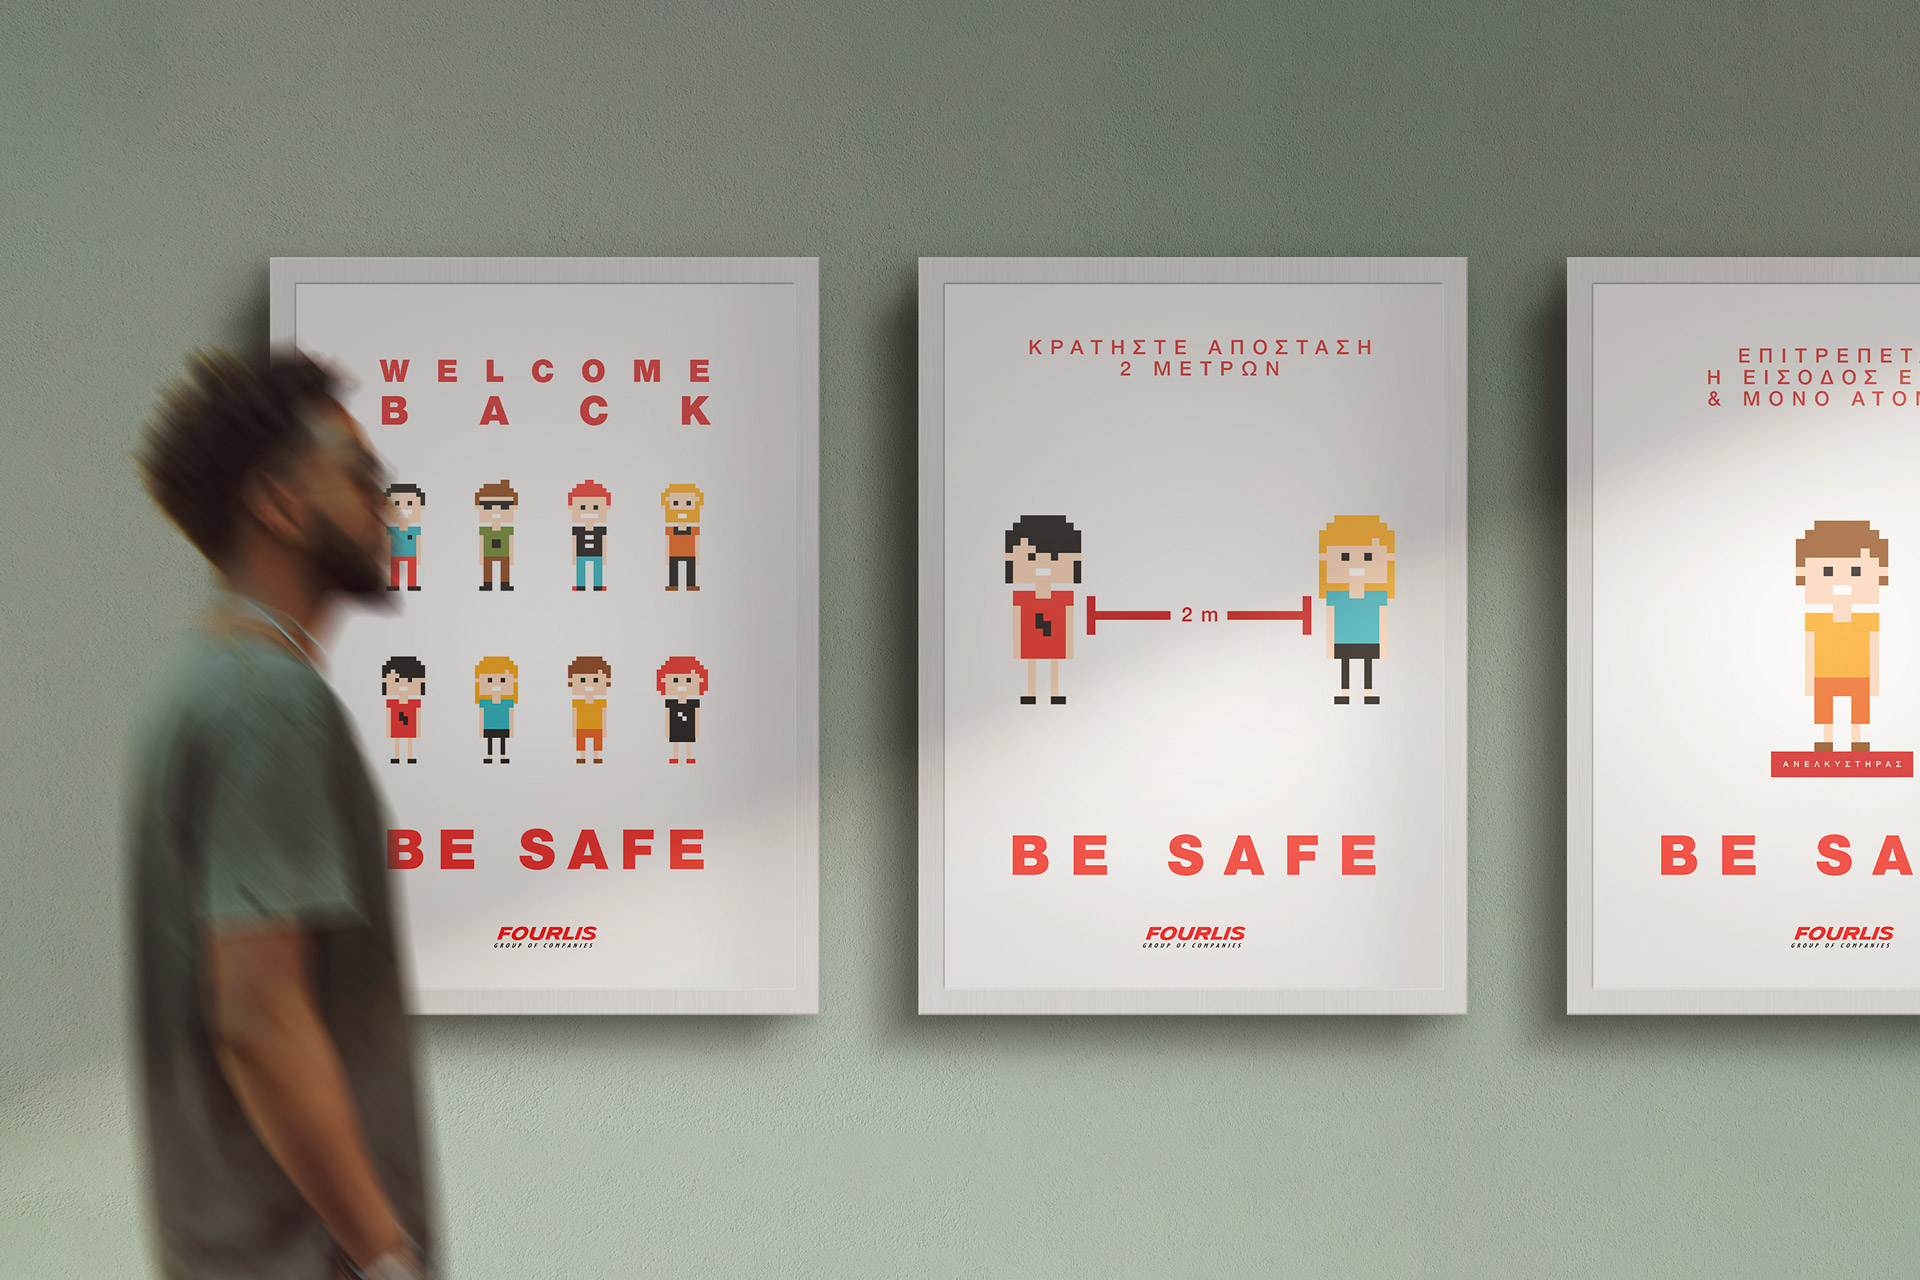 BE SAFE. FOURLIS GROUP Edition Poster Design